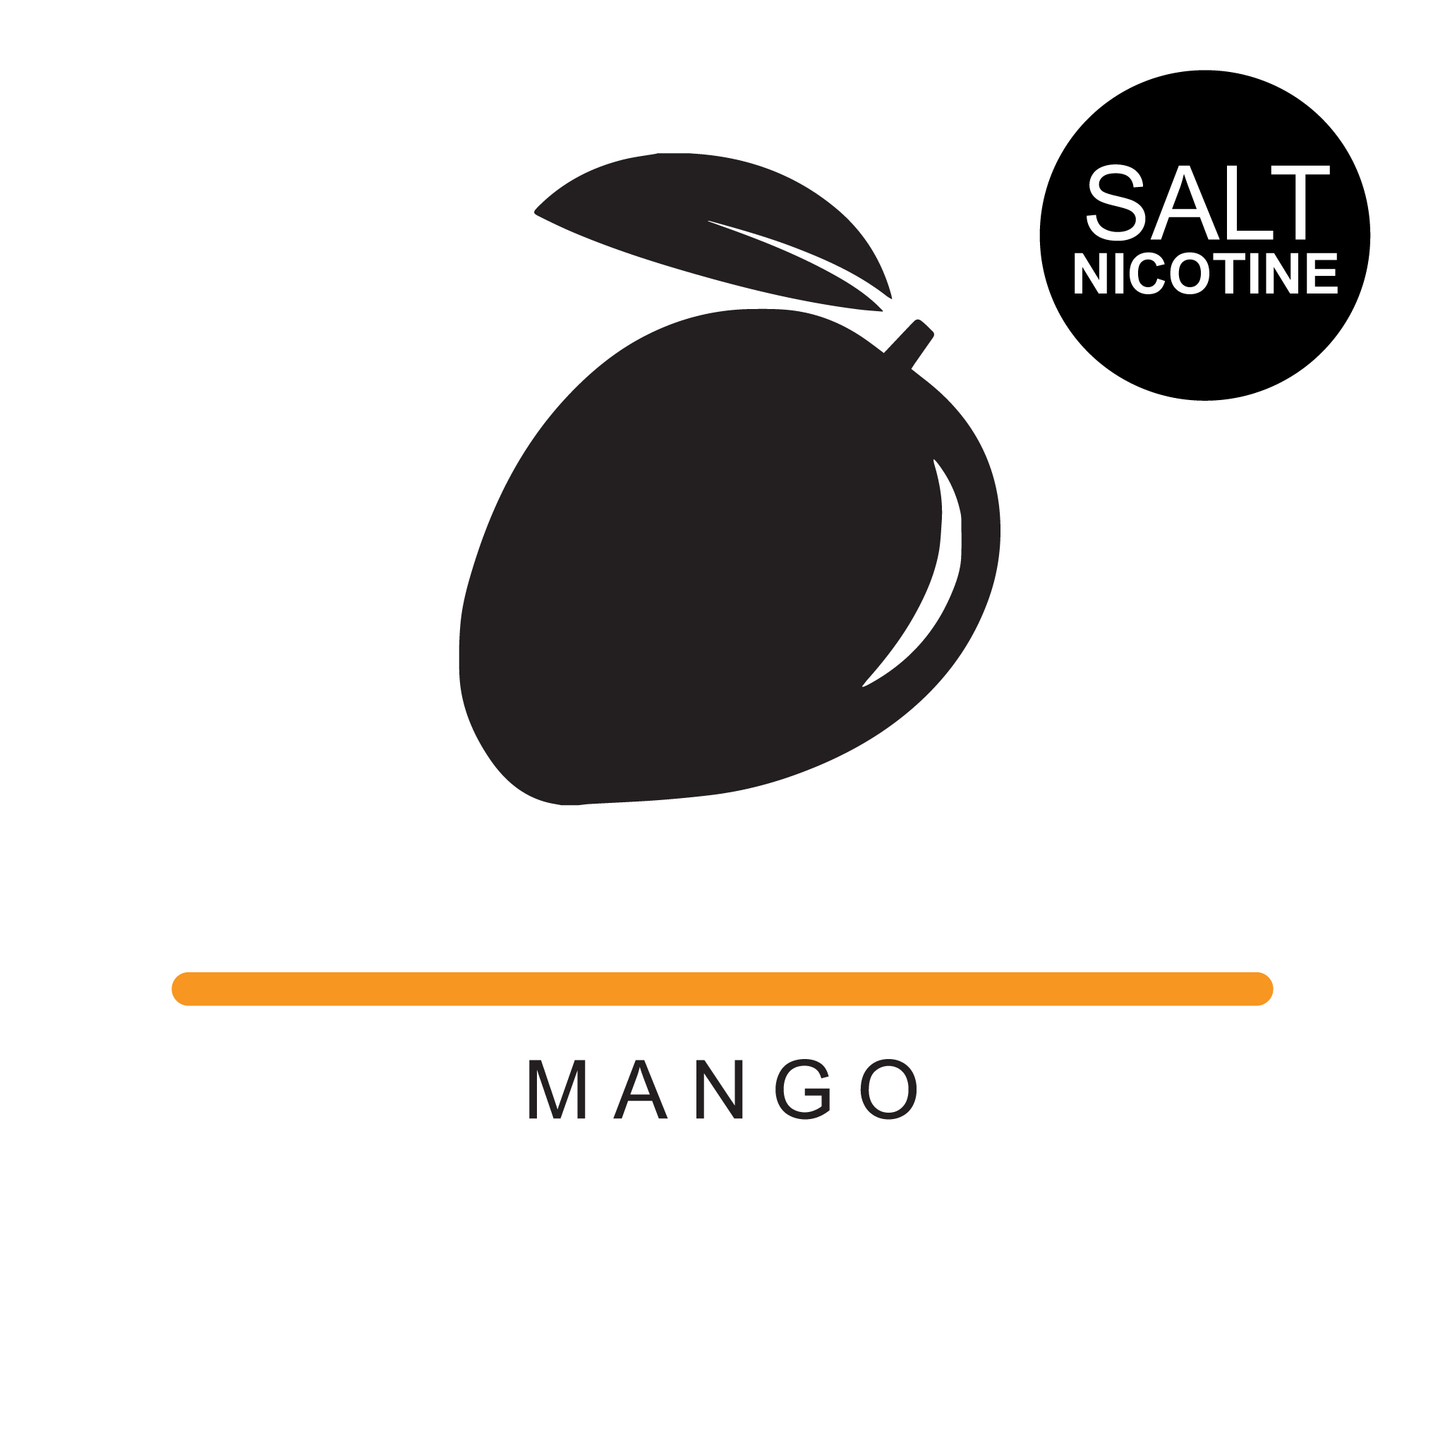 Apollo Salt Nicotine Mango 30mL E-Liquid